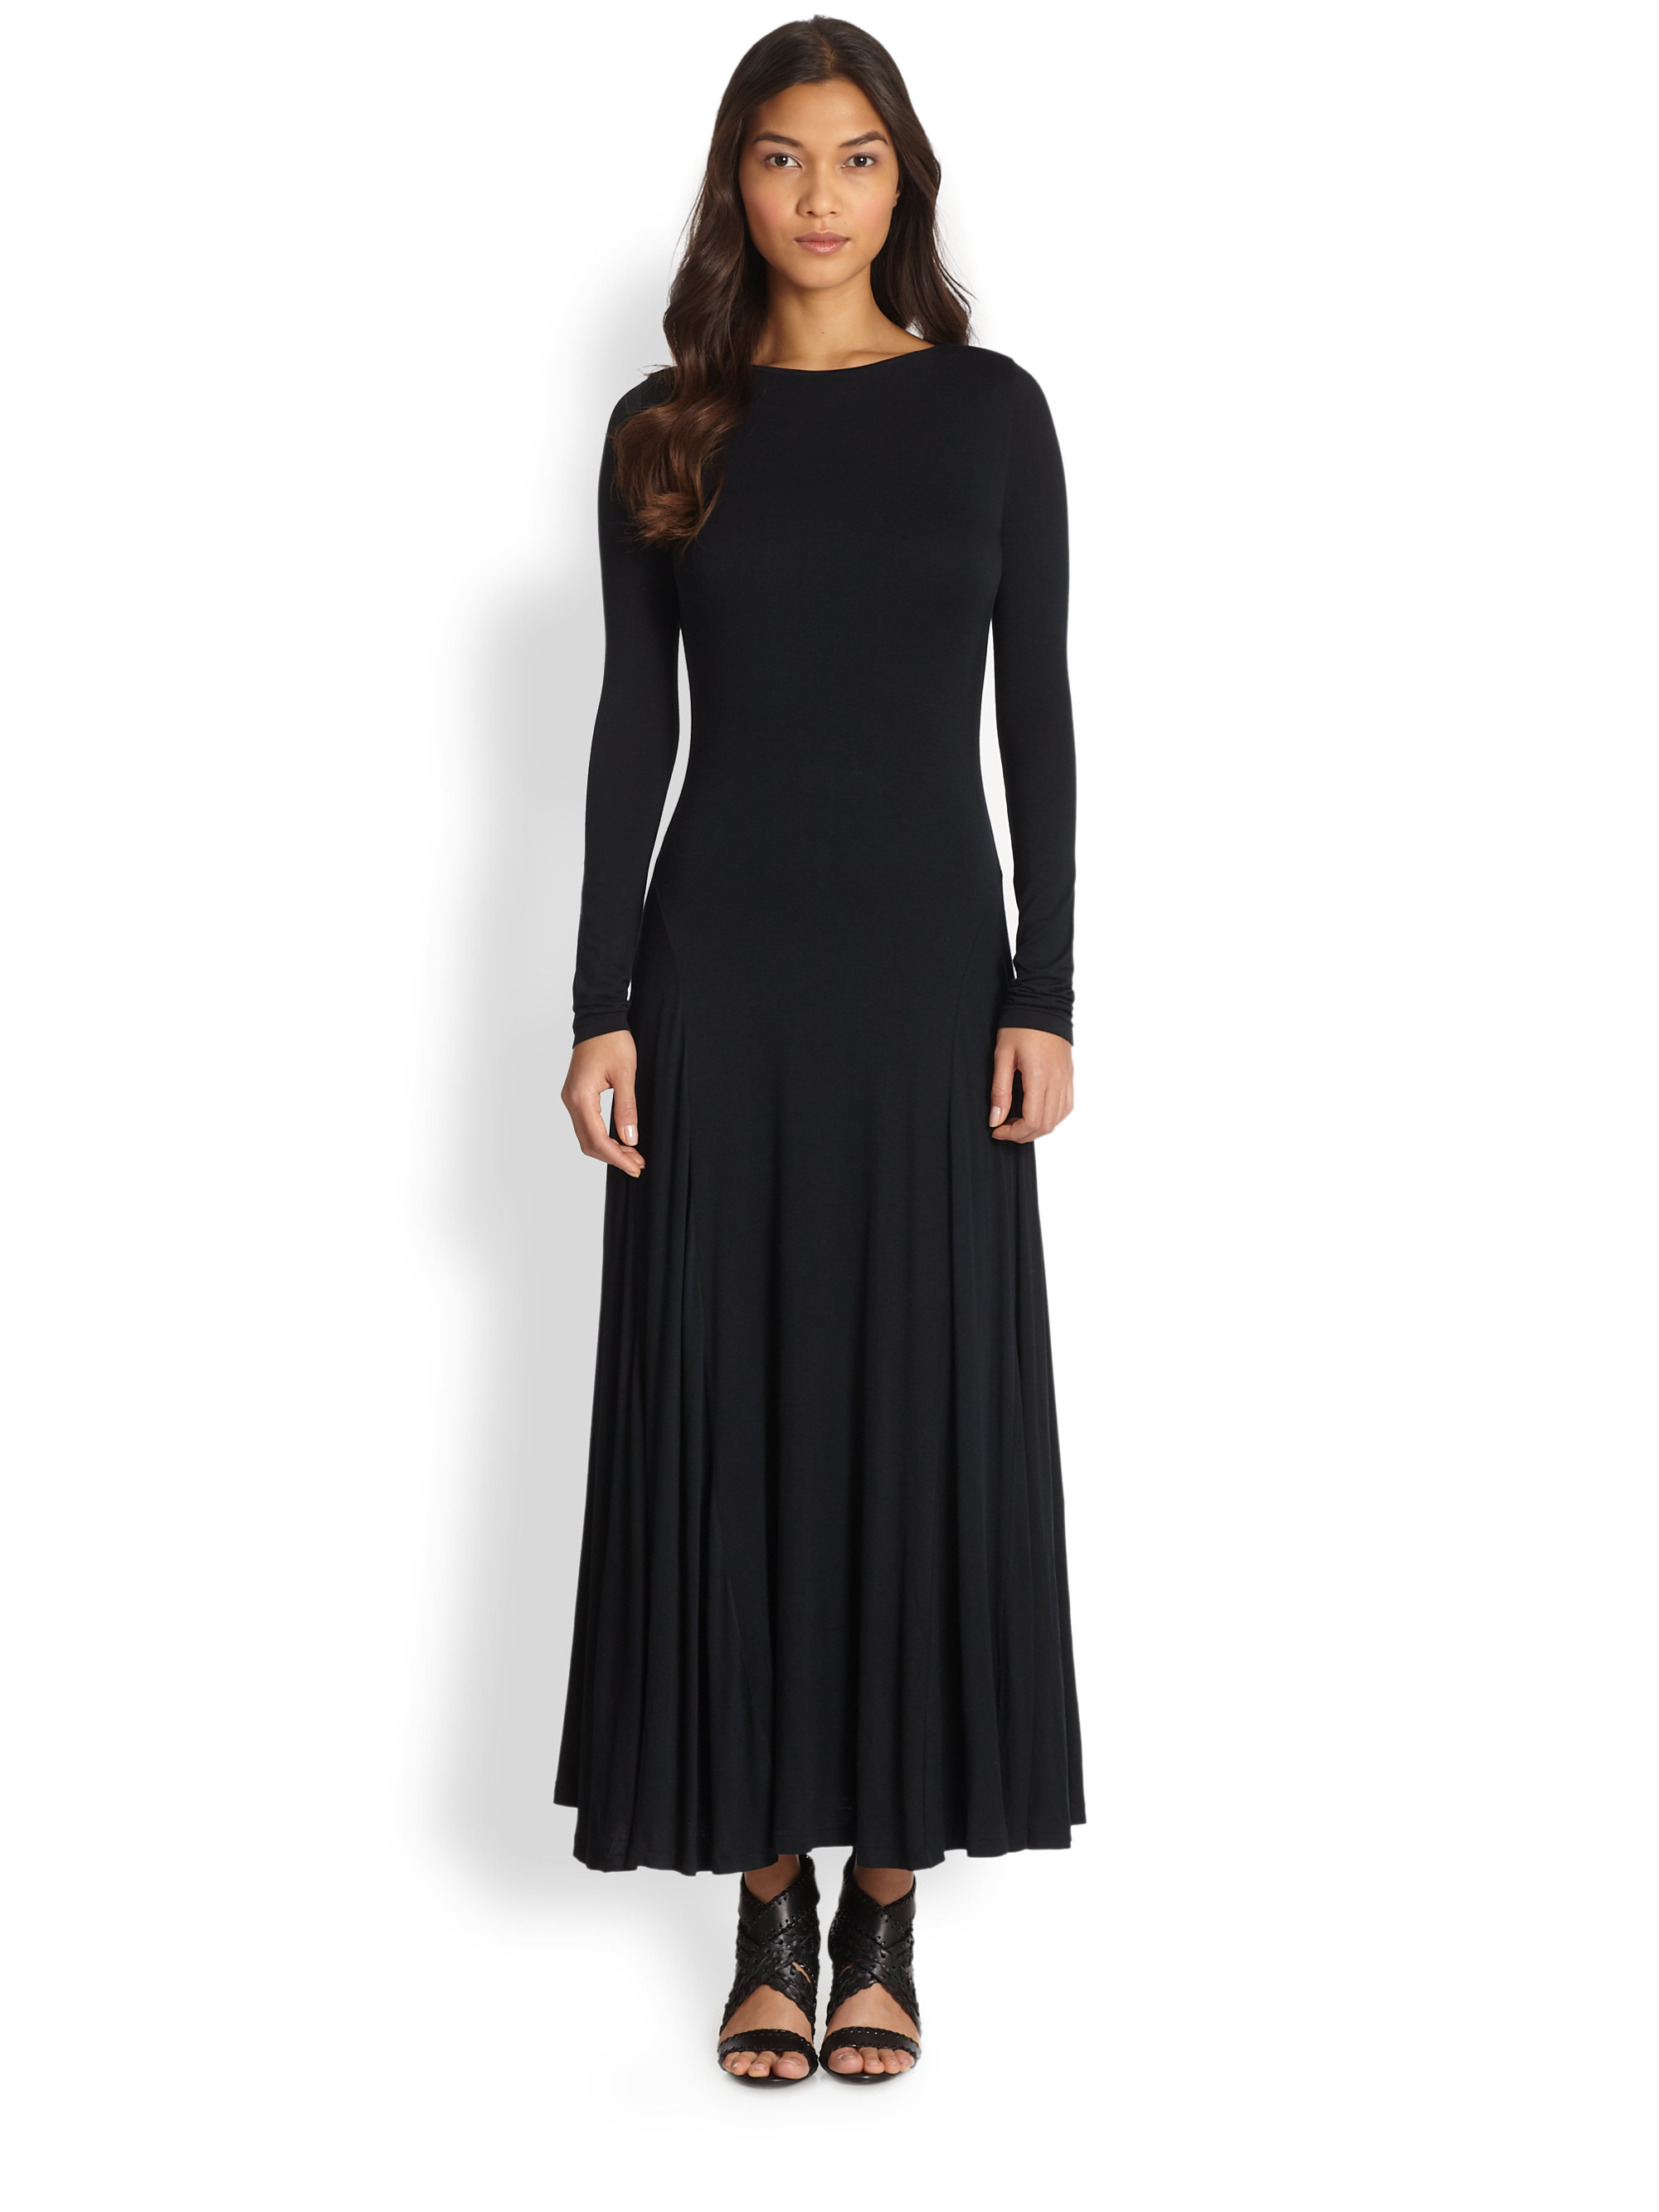 Ralph Lauren Blue Label Jersey Maxi Dress in Black - Lyst